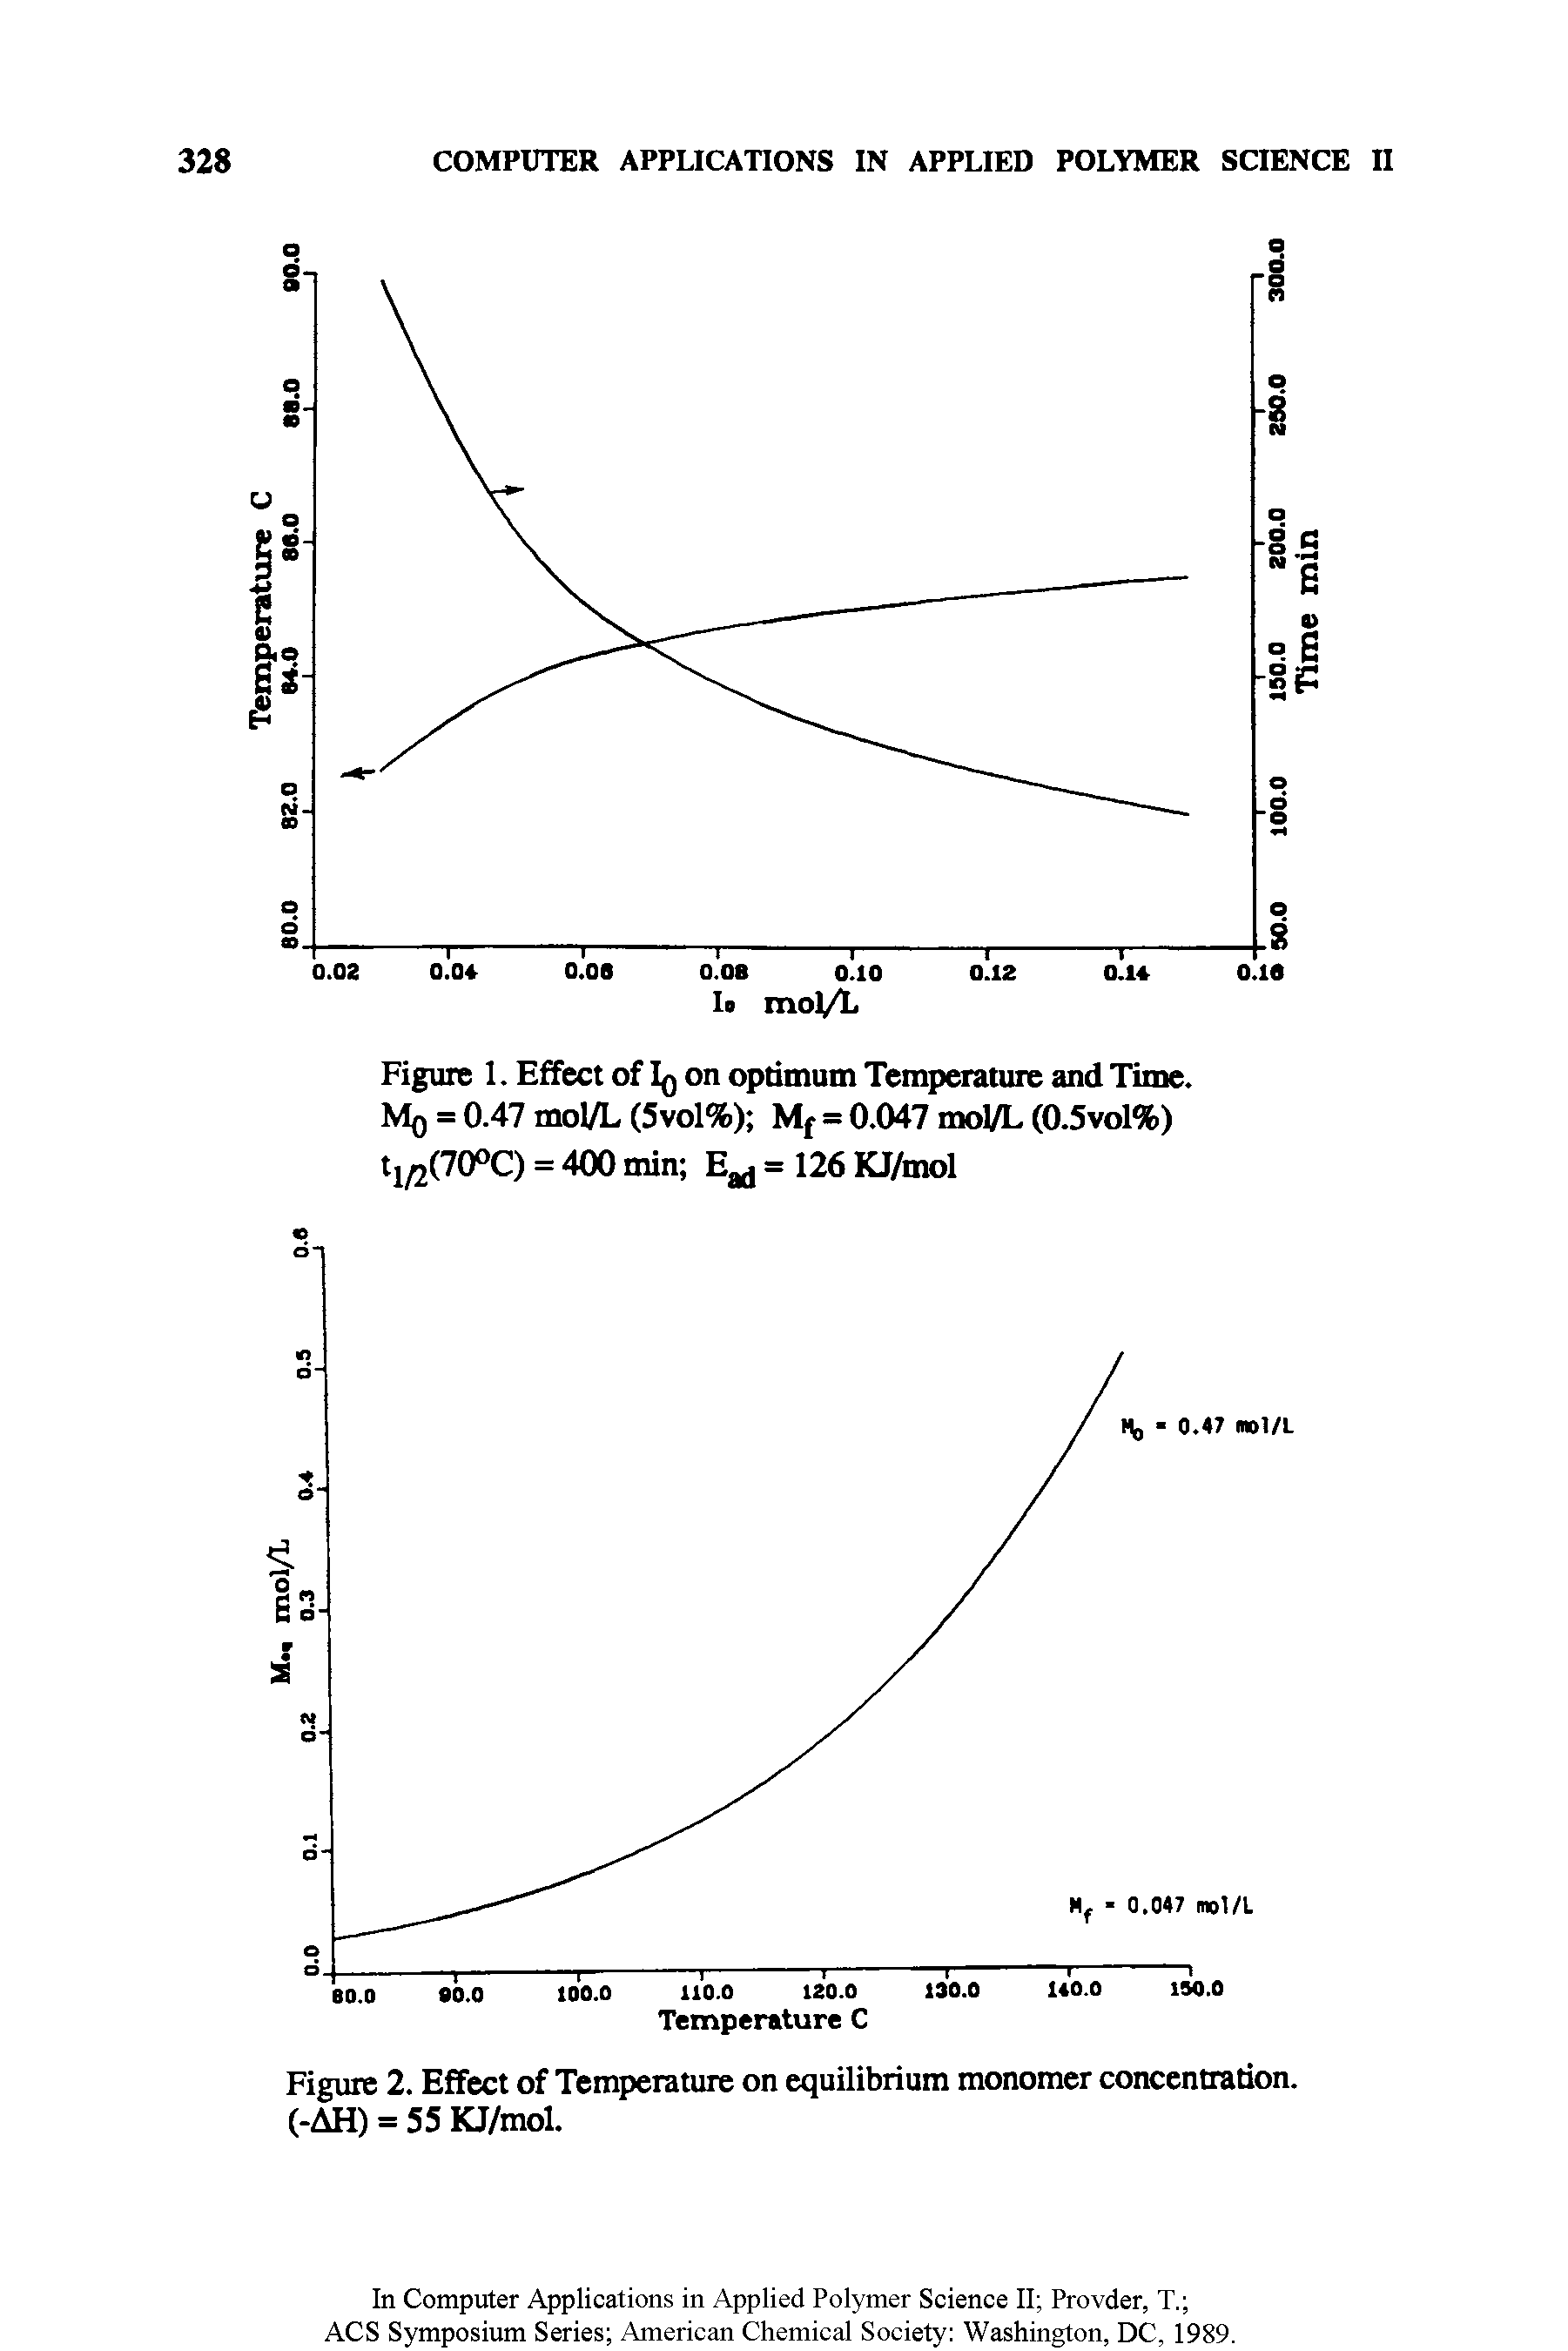 Figure 2. Effect of Temperature on equilibrium monomer concentration. (-AH) = 55 KJ/mol.